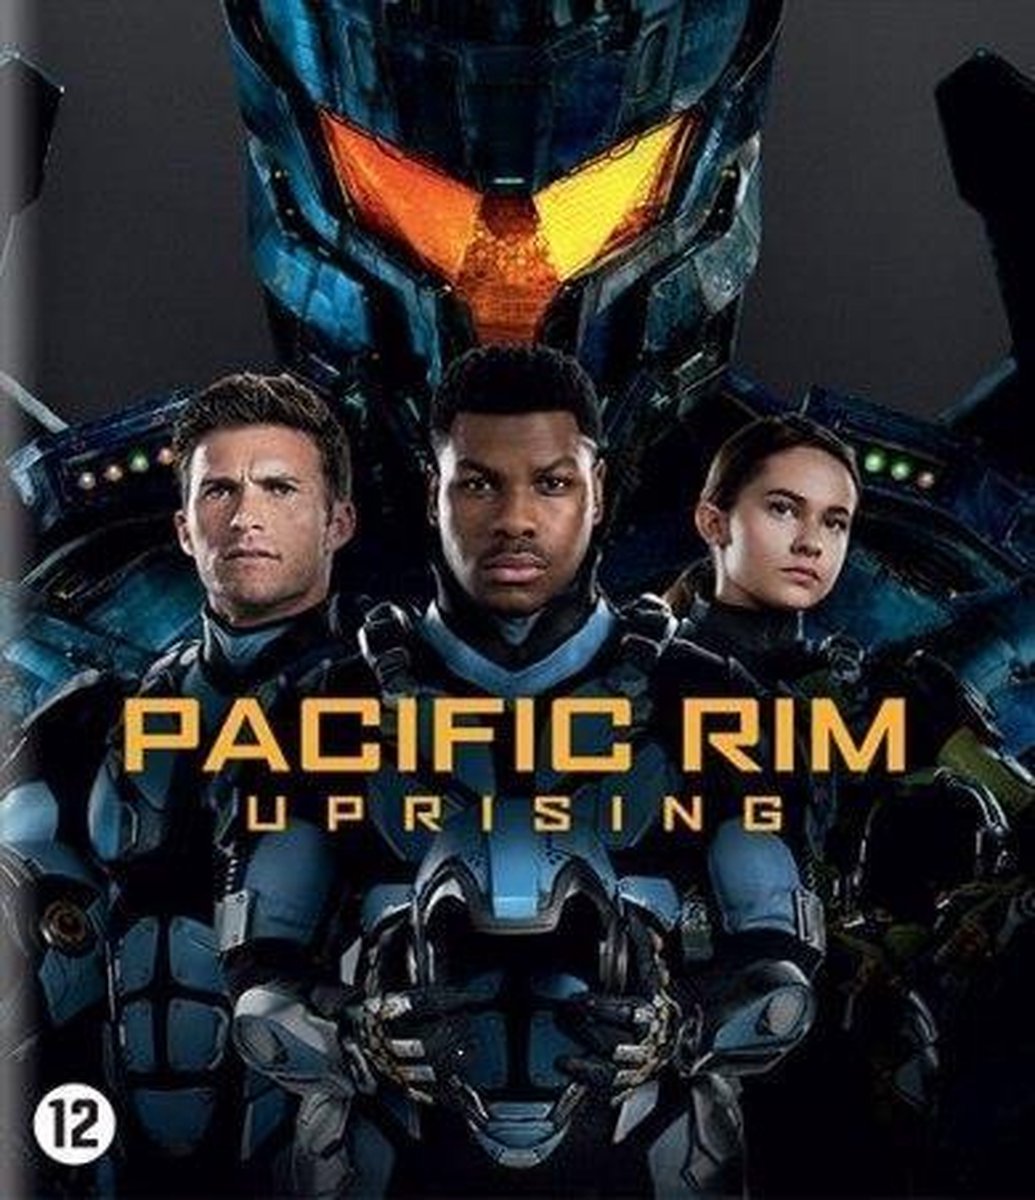 Pacific Rim 2 - Uprising (Blu-ray) - Warner Home Video